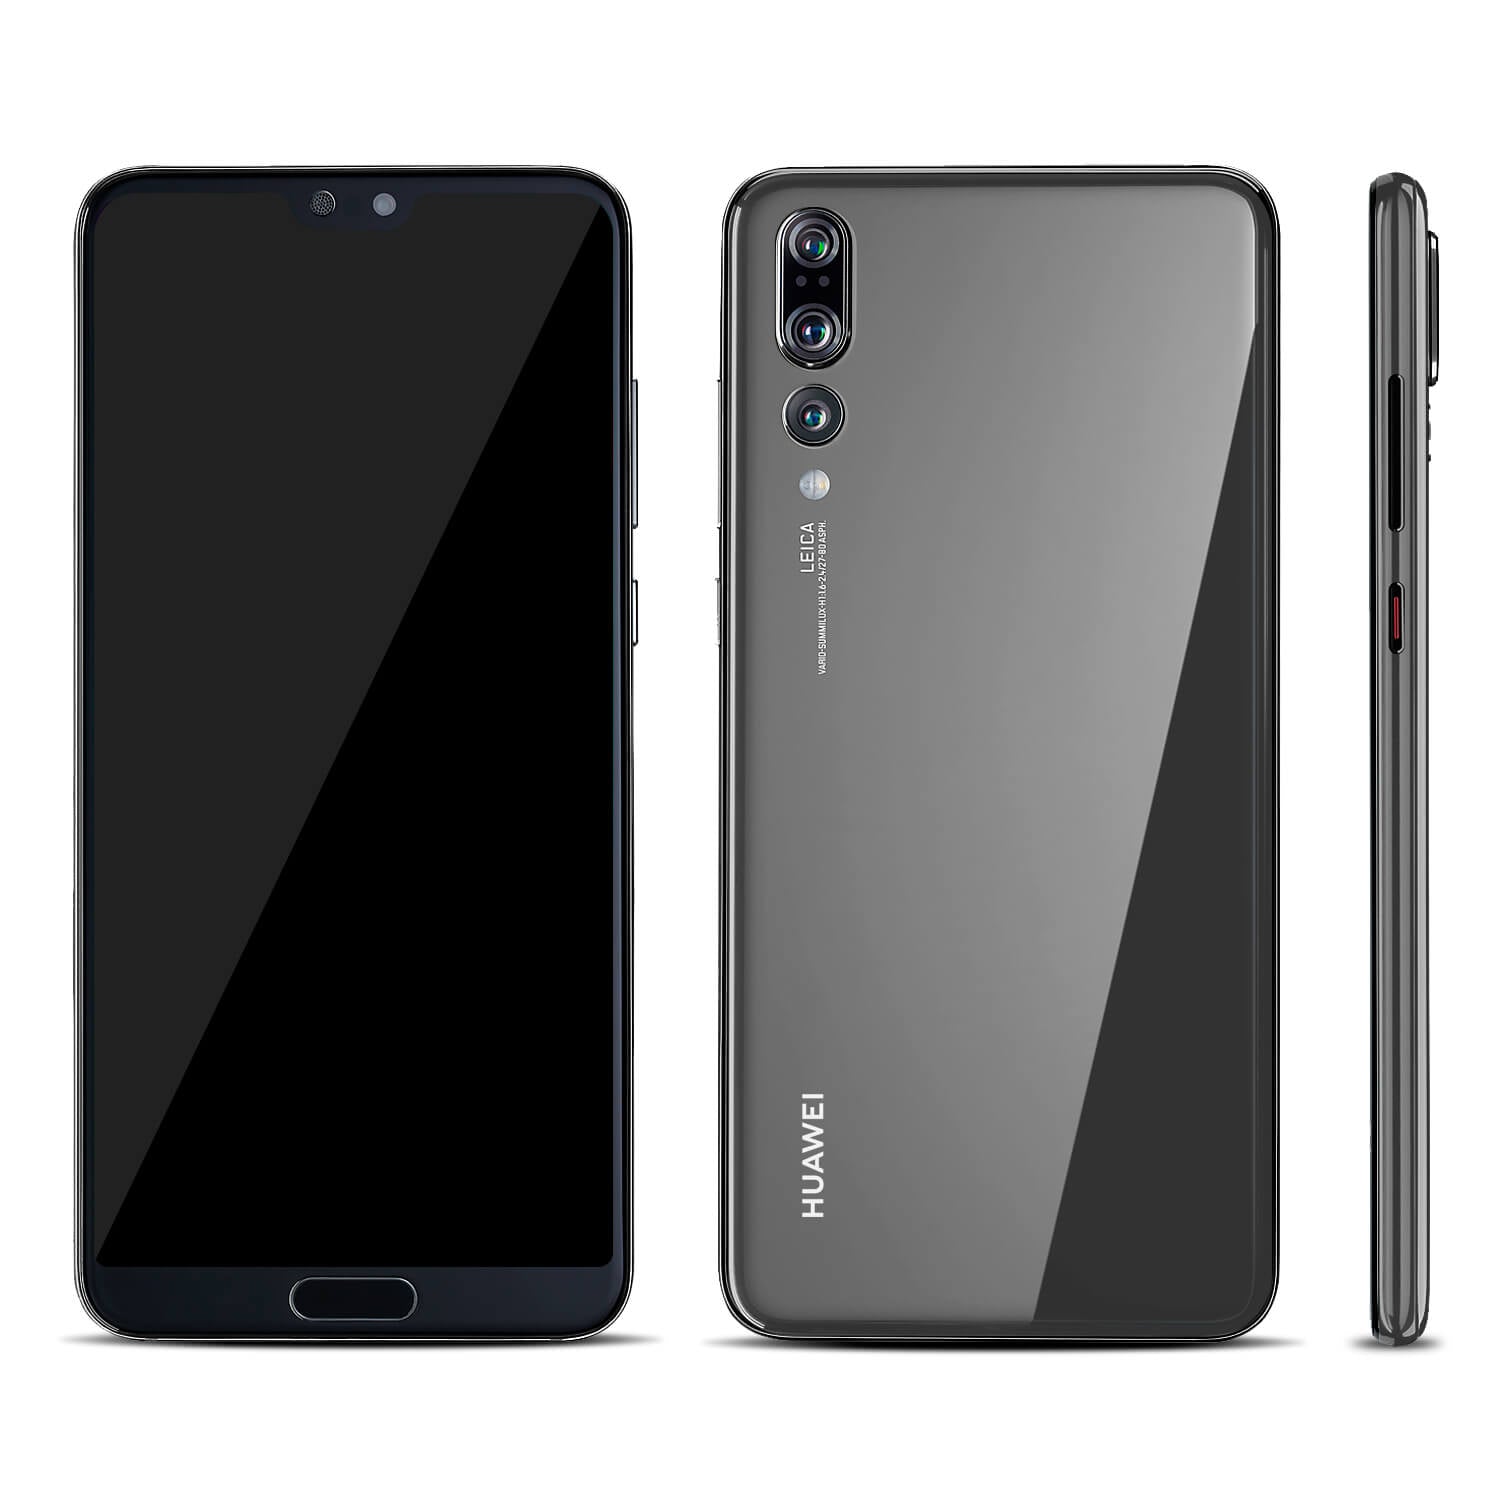 Huawei p20 pro black friday deals uk